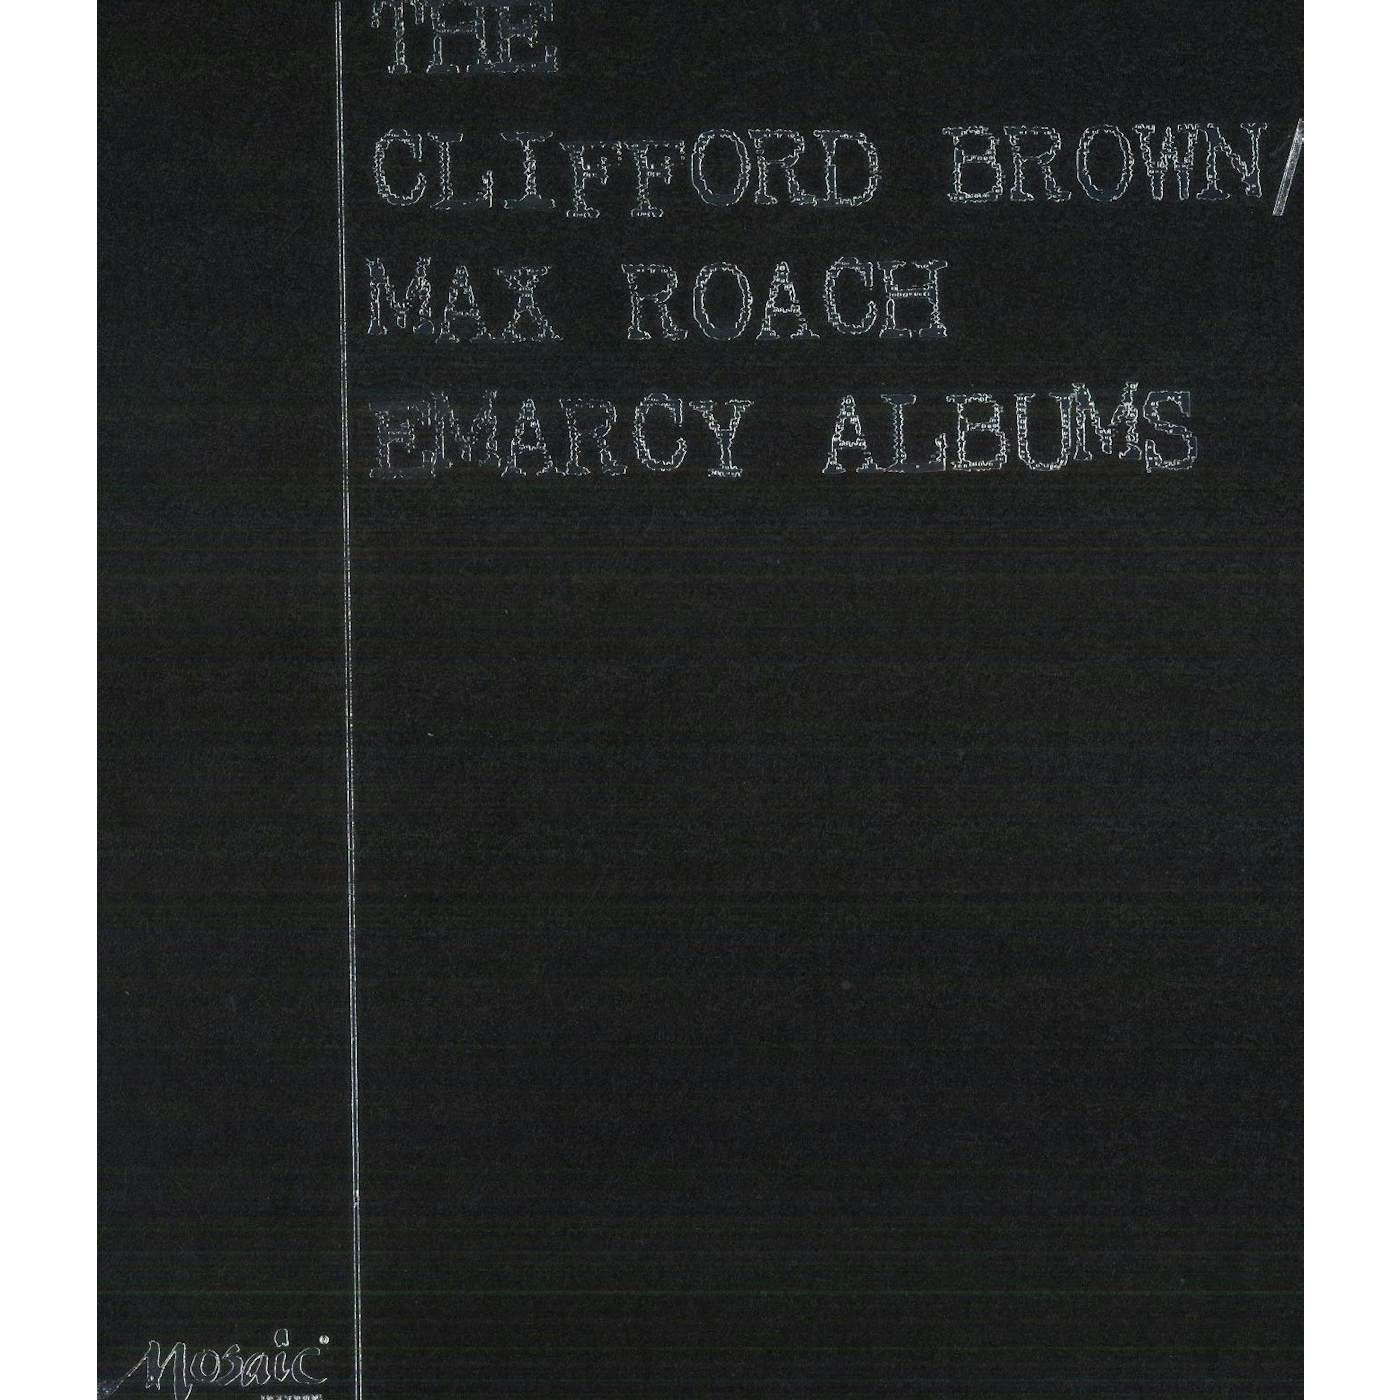 Clifford Brown & Max Roach EMARCY ALBUMS Vinyl Record